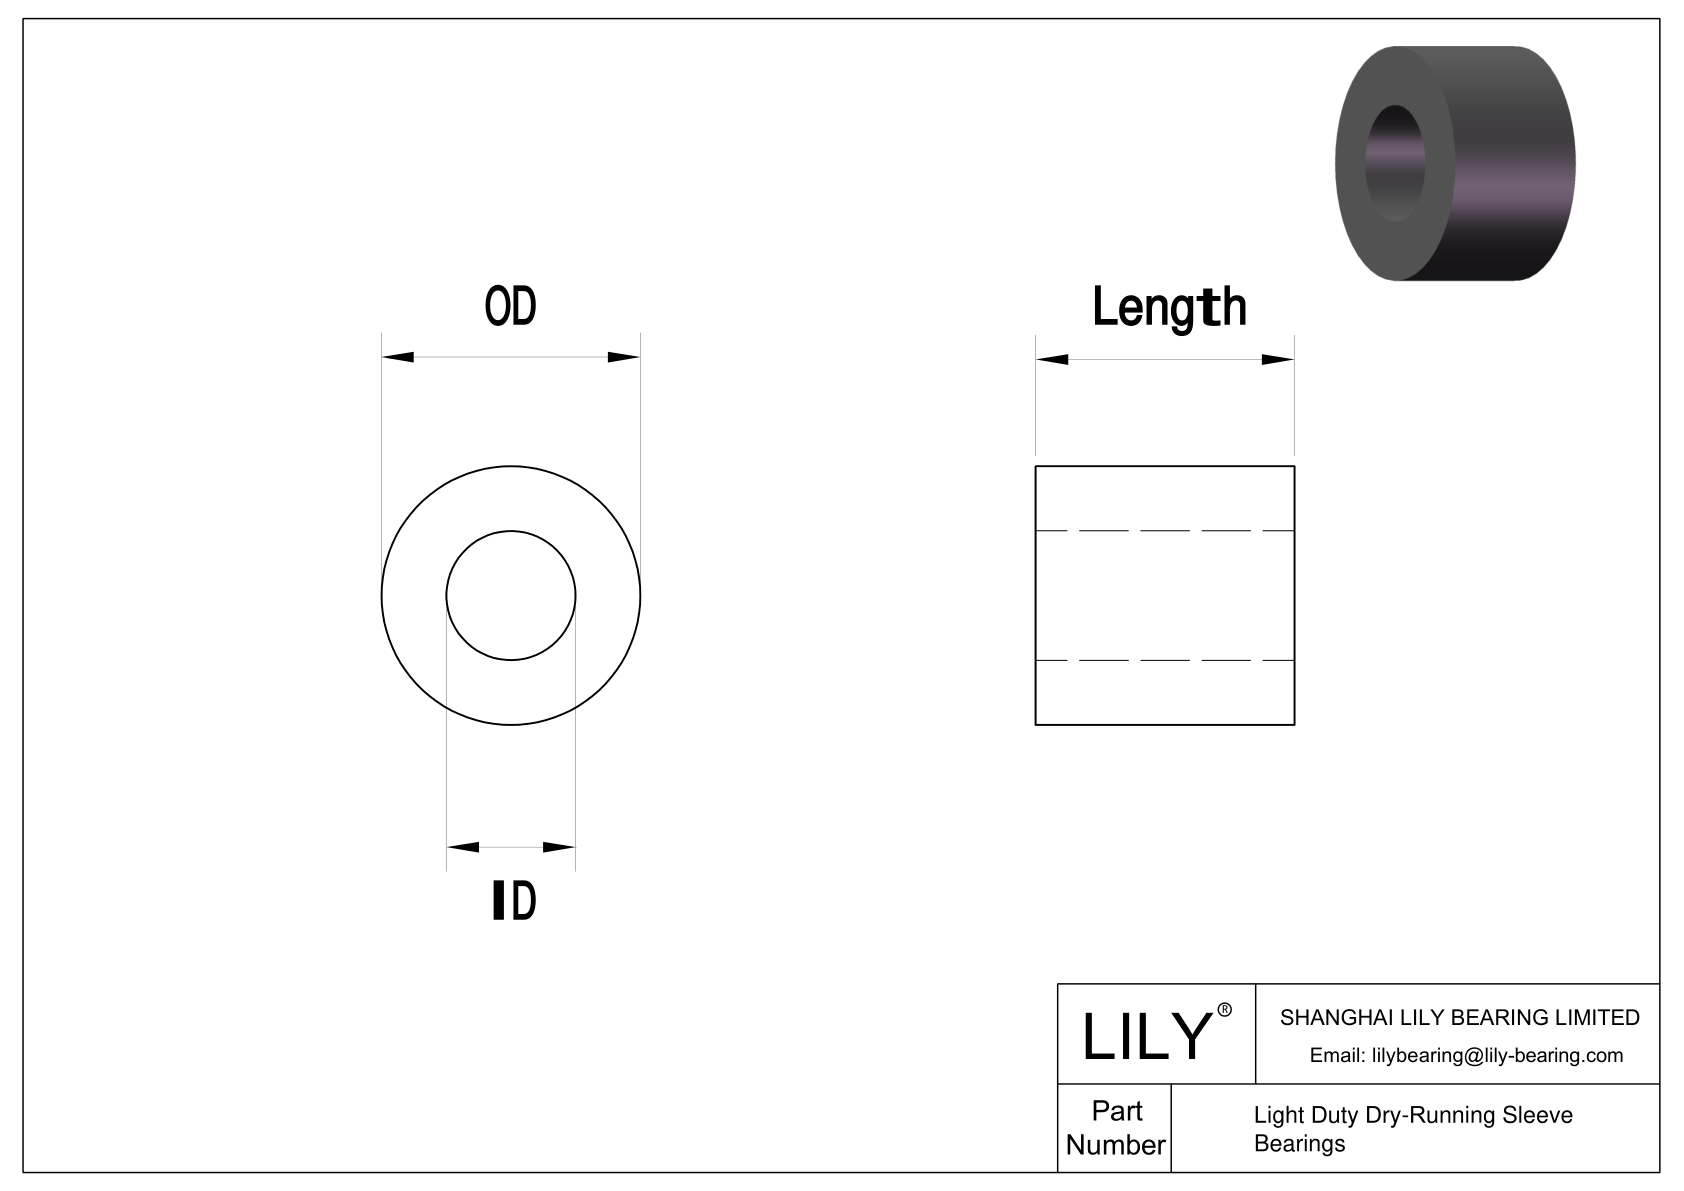 6389K344 Light Duty Dry-Running Sleeve Bearings cad drawing